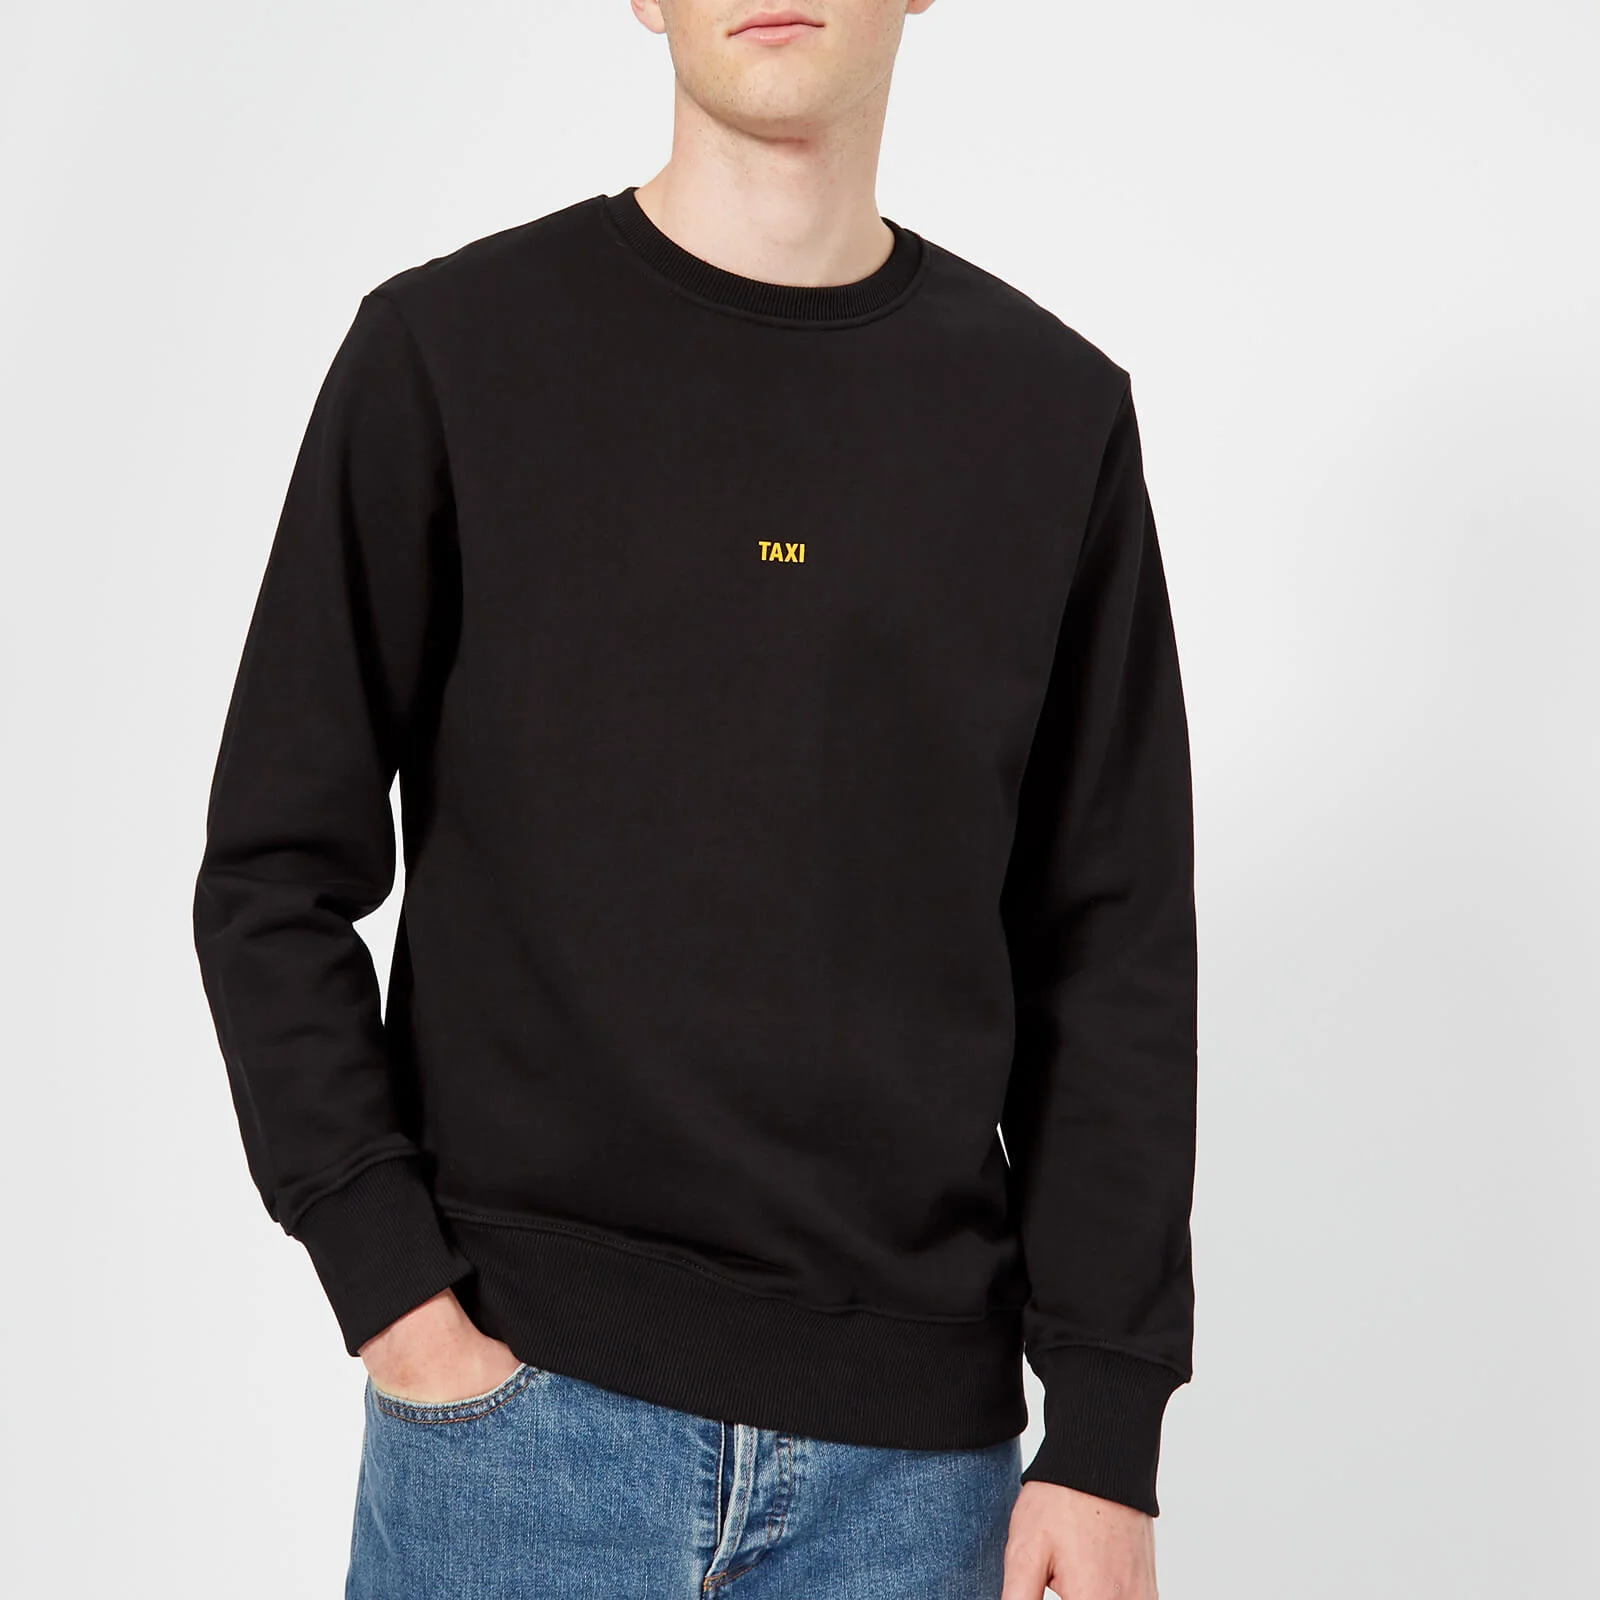 Helmut Lang Men's London Taxi Sweatshirt - Black Image 1